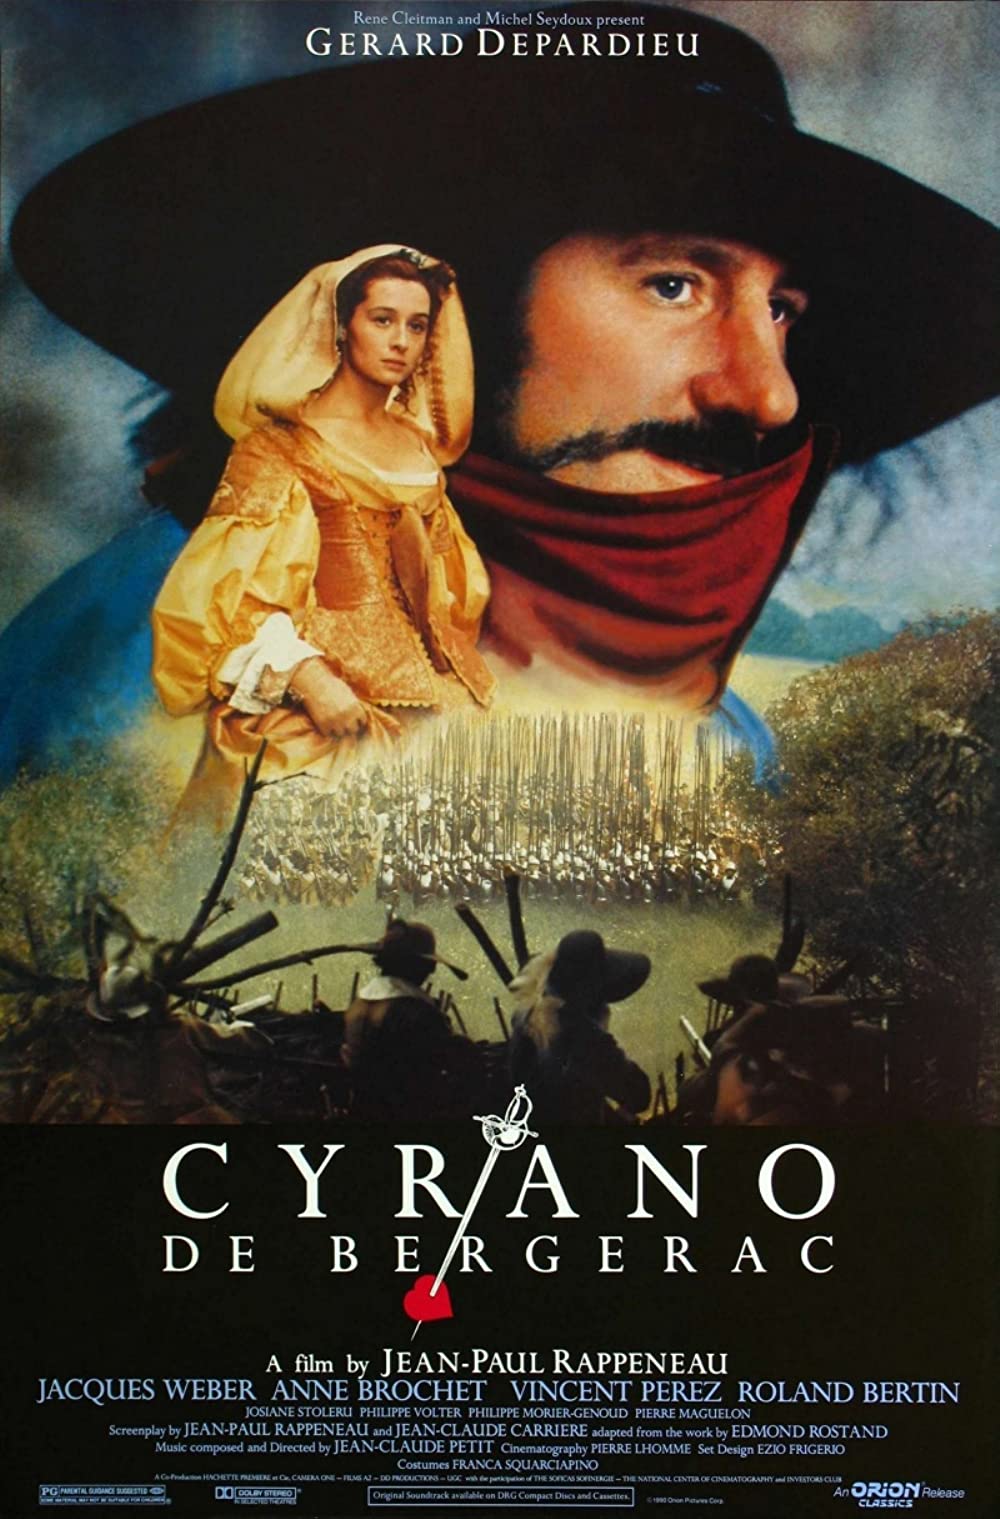 Filmbeschreibung zu Cyrano de Bergerac